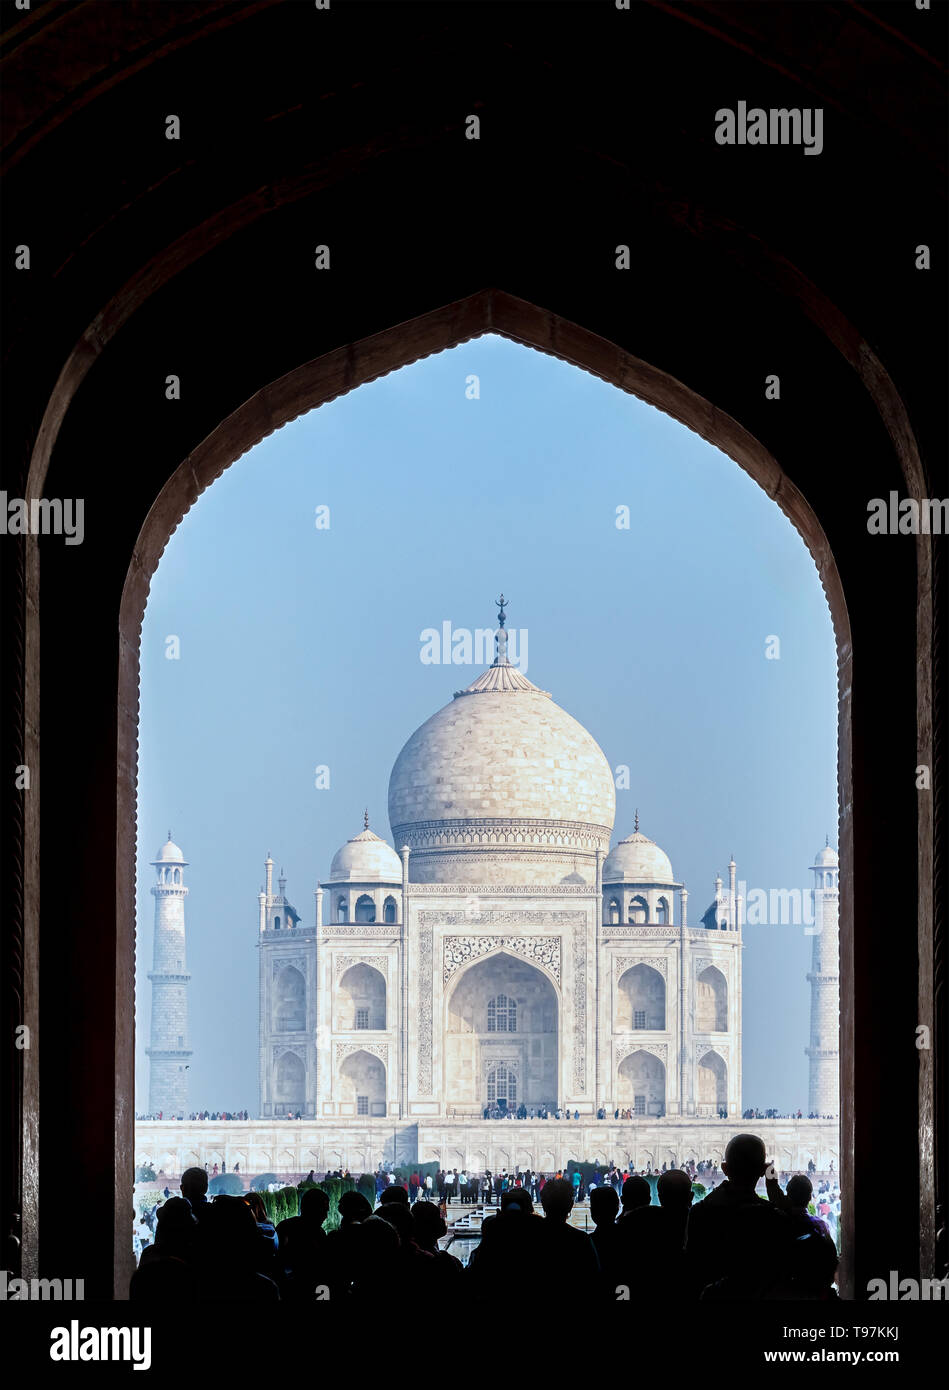 Visiting Taj Mahal build in 17th century by Moghul Emperor Shah Jehan in memory of his beloved wife Mumtaz Mahal. Stock Photo